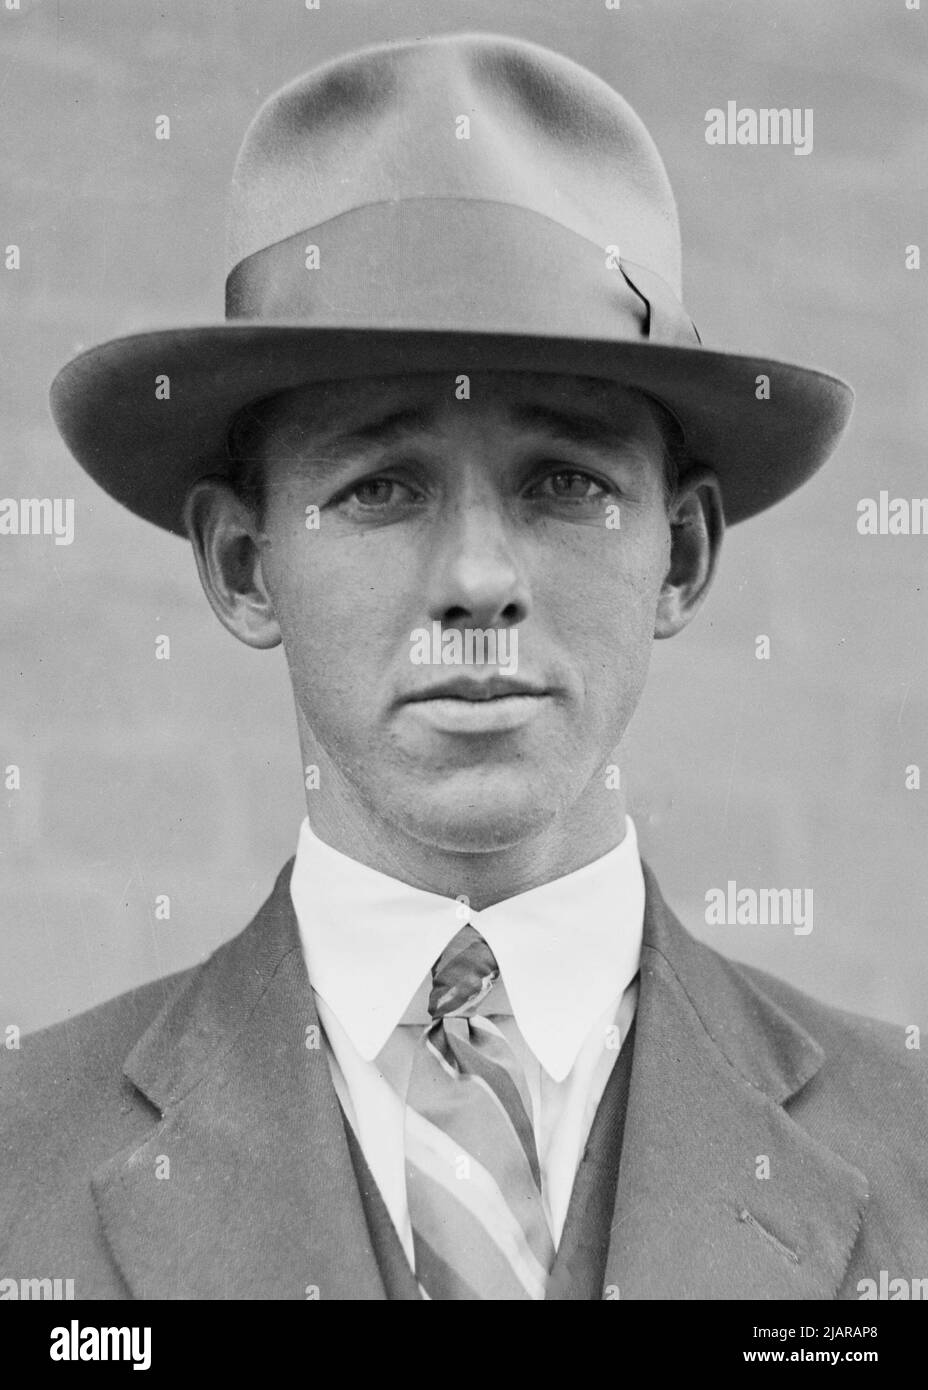 Cricketer australiano Archie Jackson ca. 1929 Foto Stock